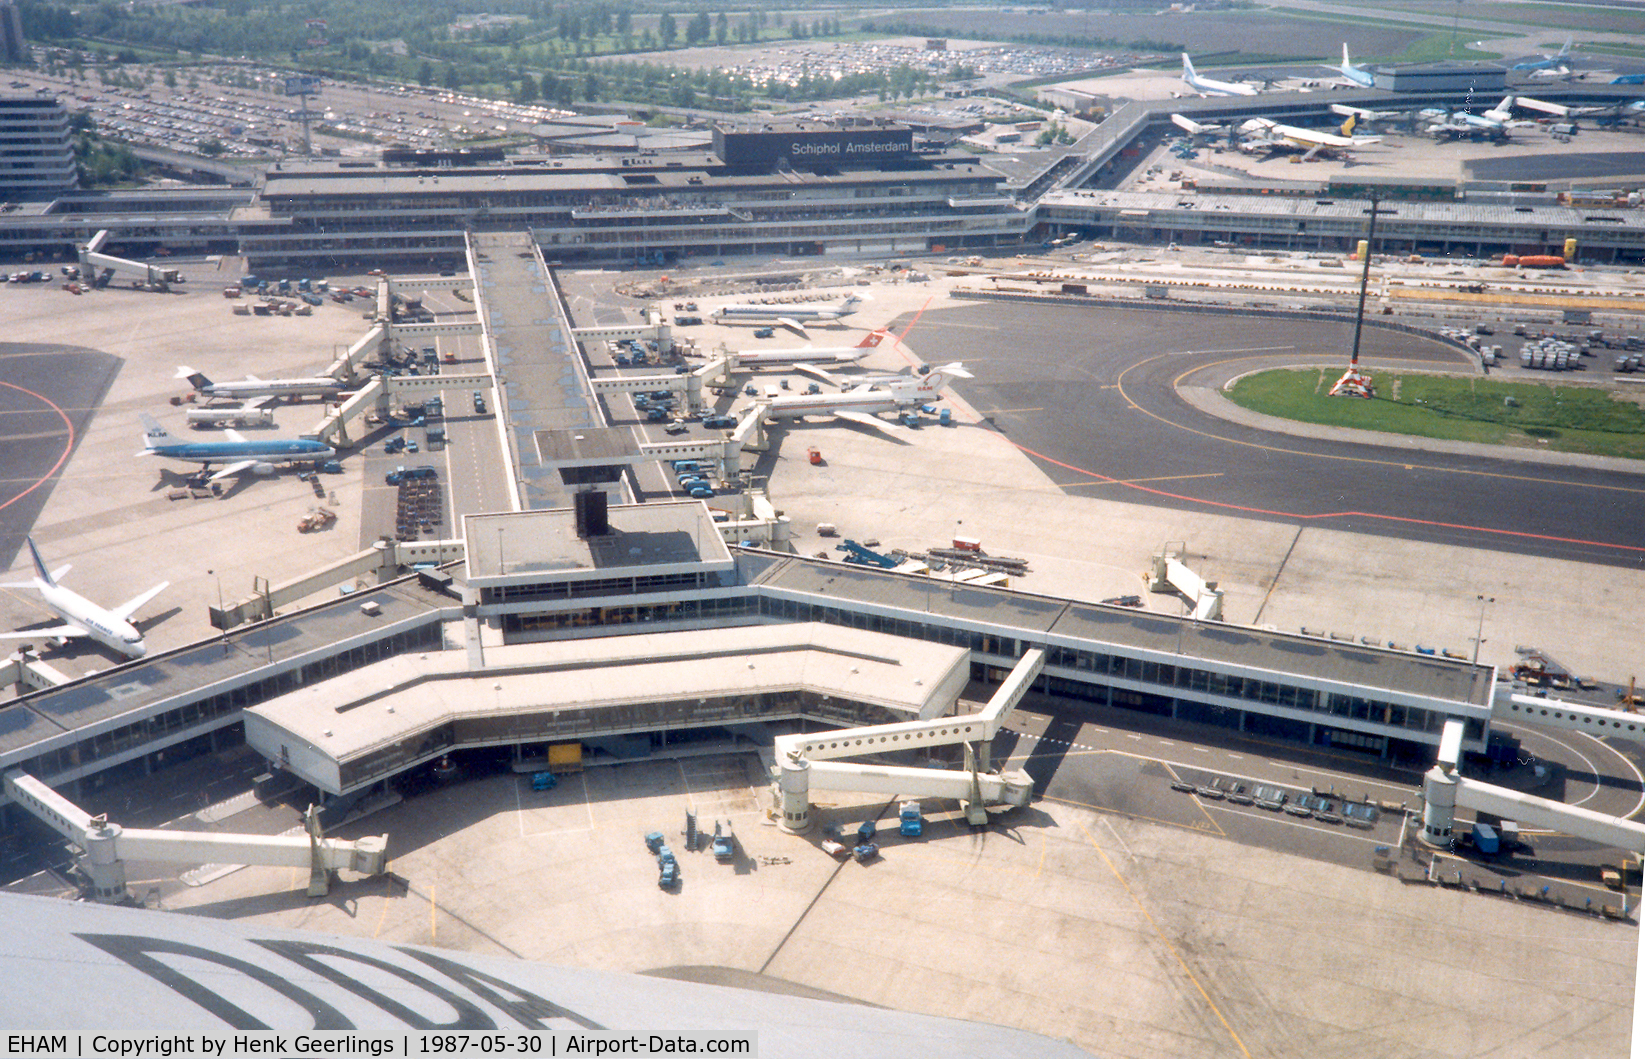 Amsterdam Schiphol Airport, Haarlemmermeer, near Amsterdam Netherlands (EHAM) - DDA - Dutch Dakota Association , Schiphol , 1987

On board DDA , Dakota